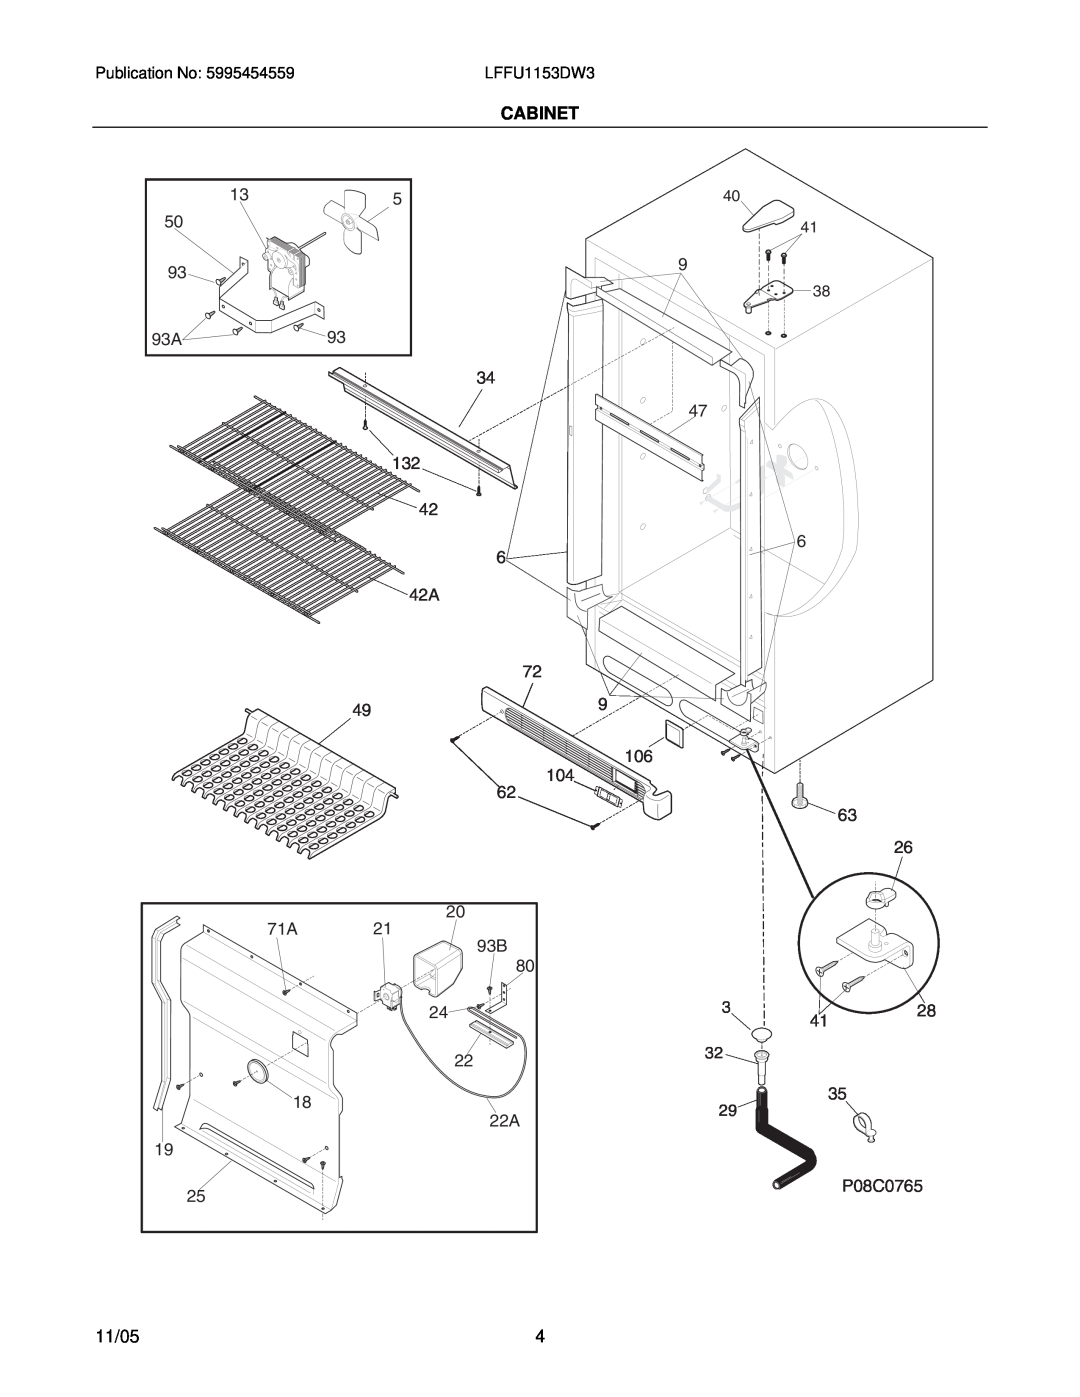 Electrolux manual Cabinet, P08C0765, 11/05, Publication No, LFFU1153DW3 